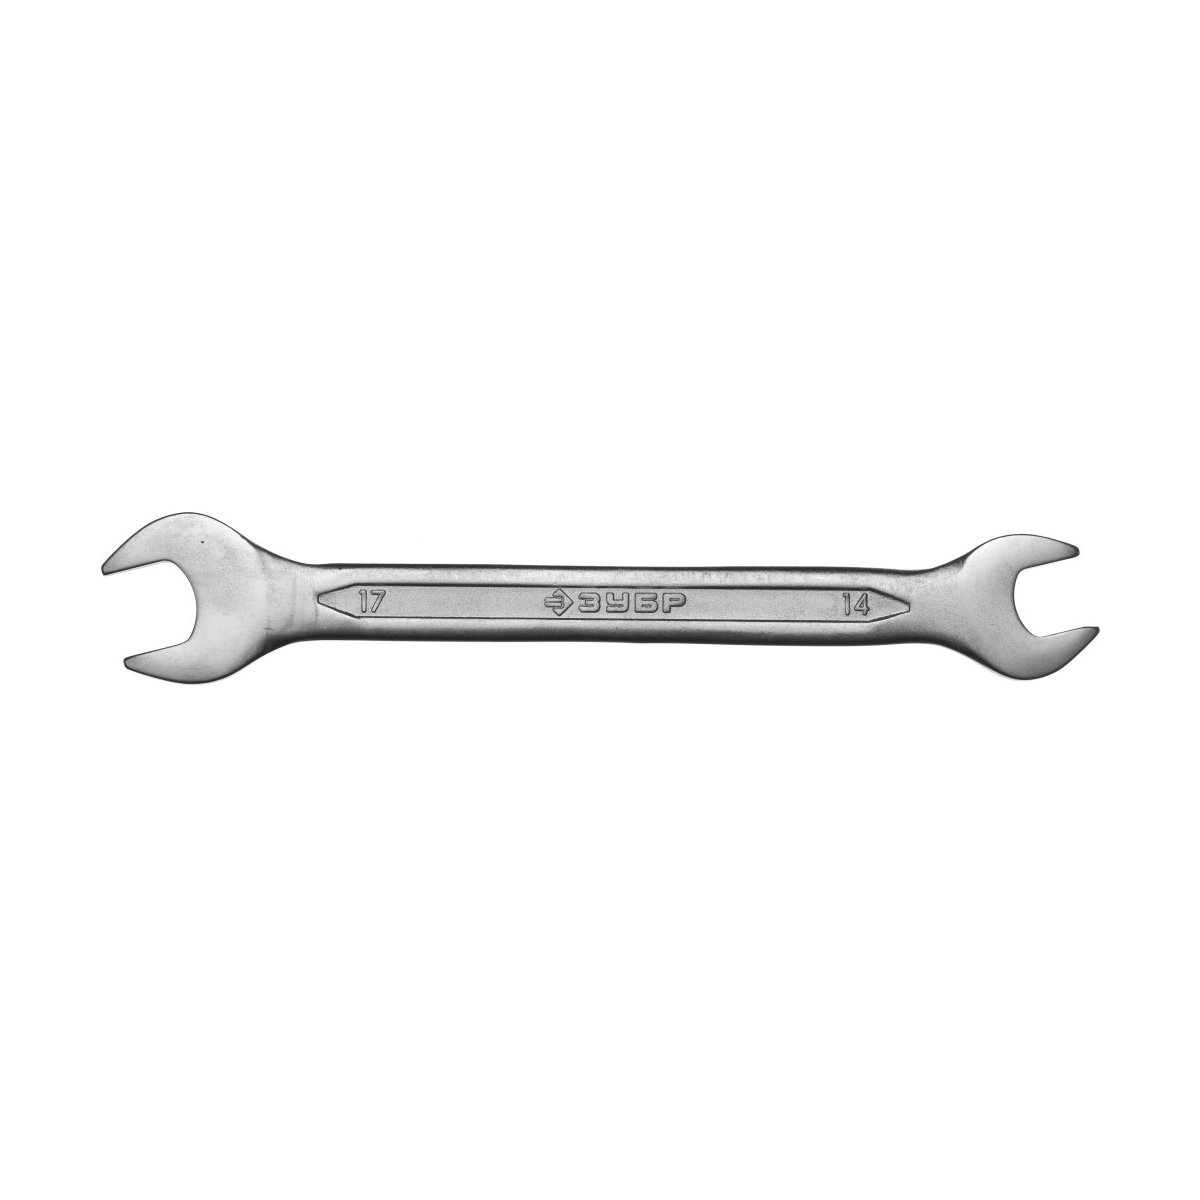 ЗУБР 14х17 мм, Cr-V сталь, хромированный, гаечный ключ рожковый 27010-14-17